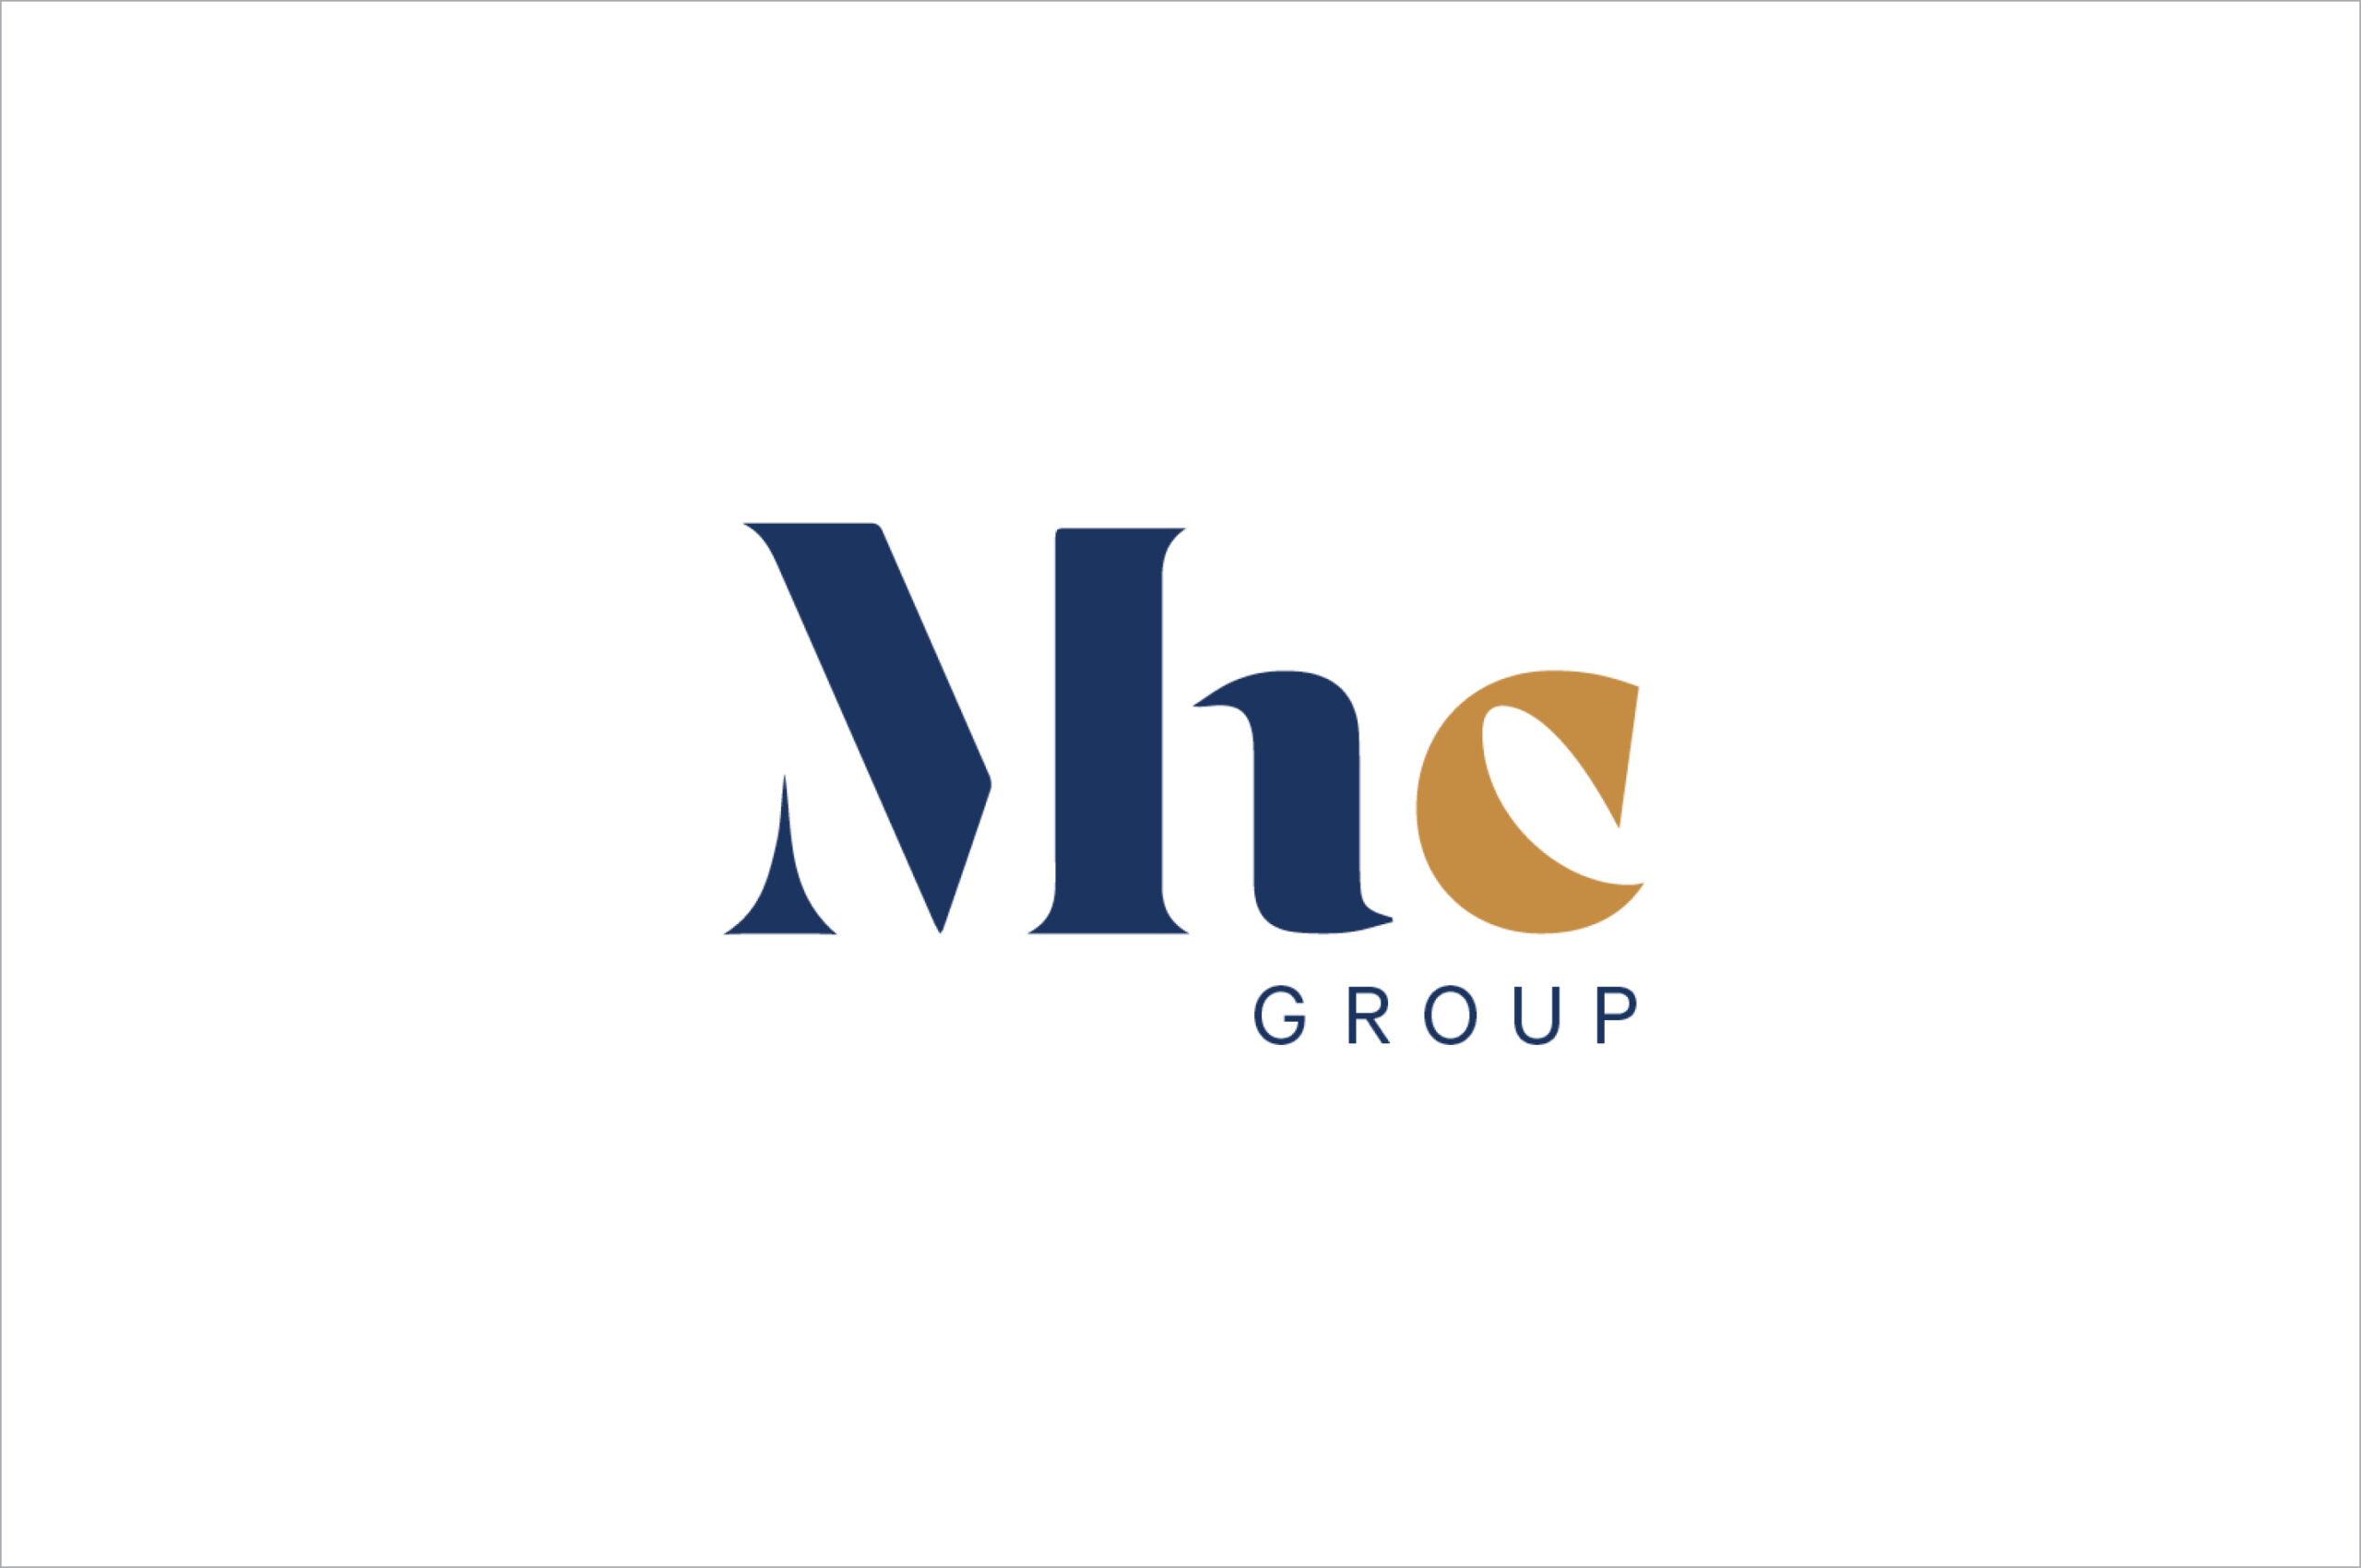 Mhc Group logo